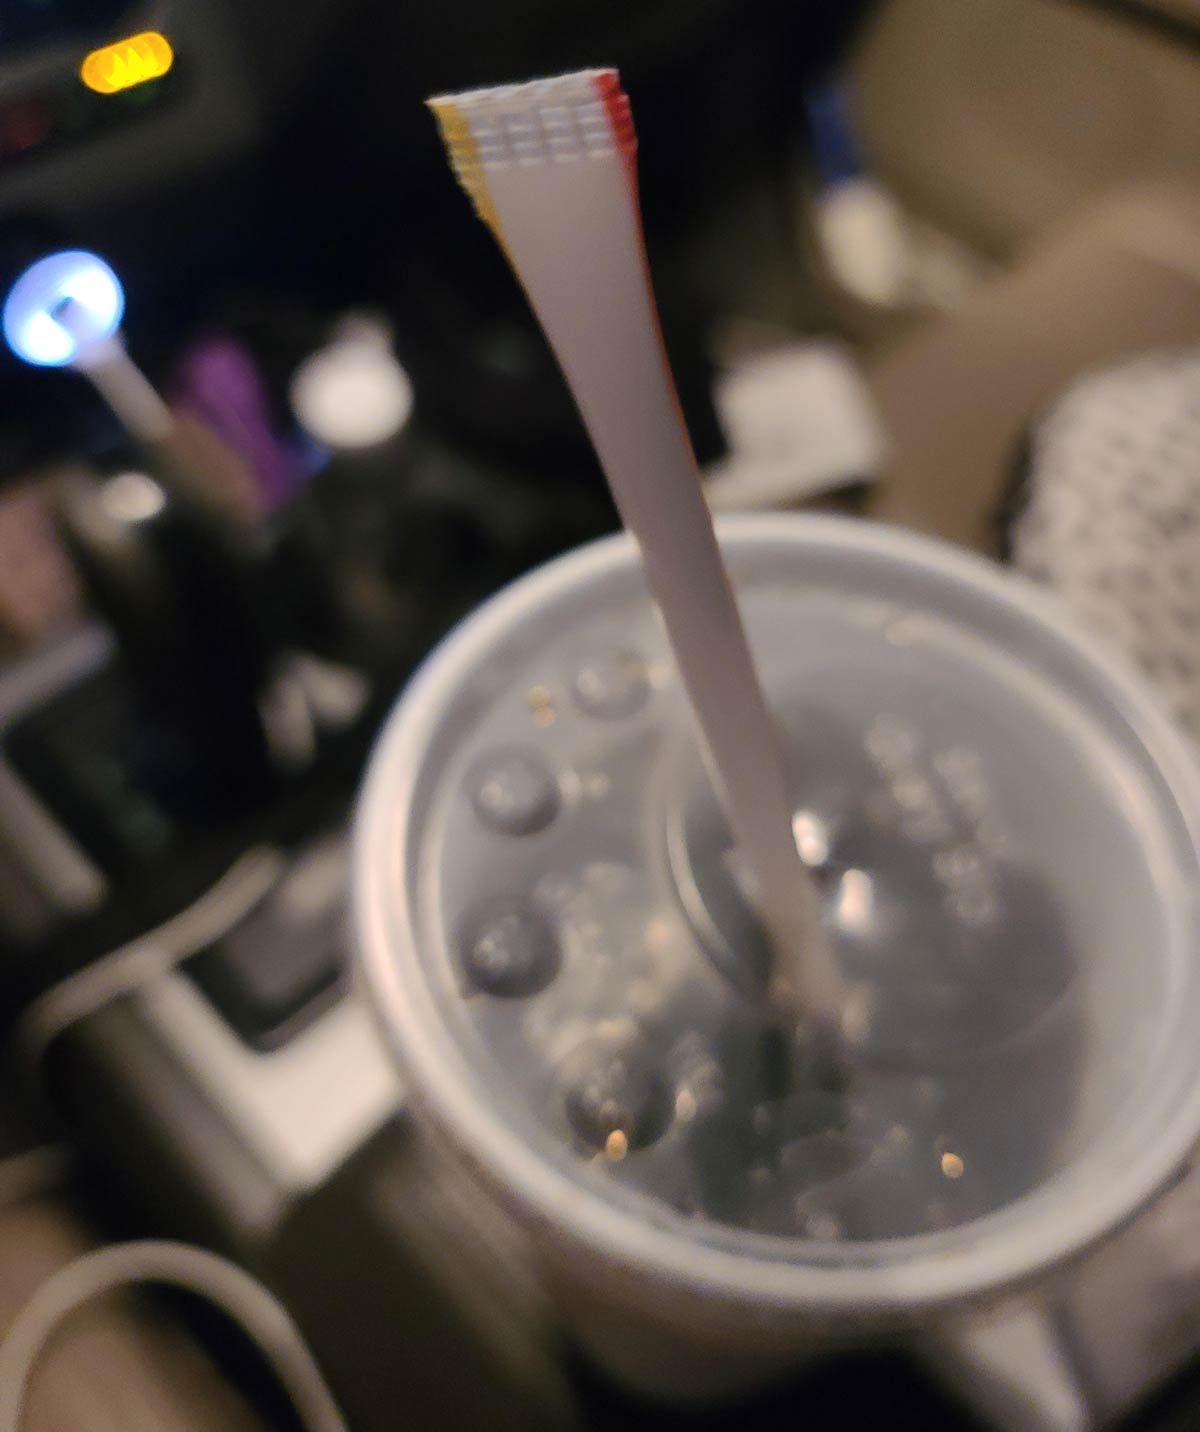 McDonald's just gave me the cruelest straw